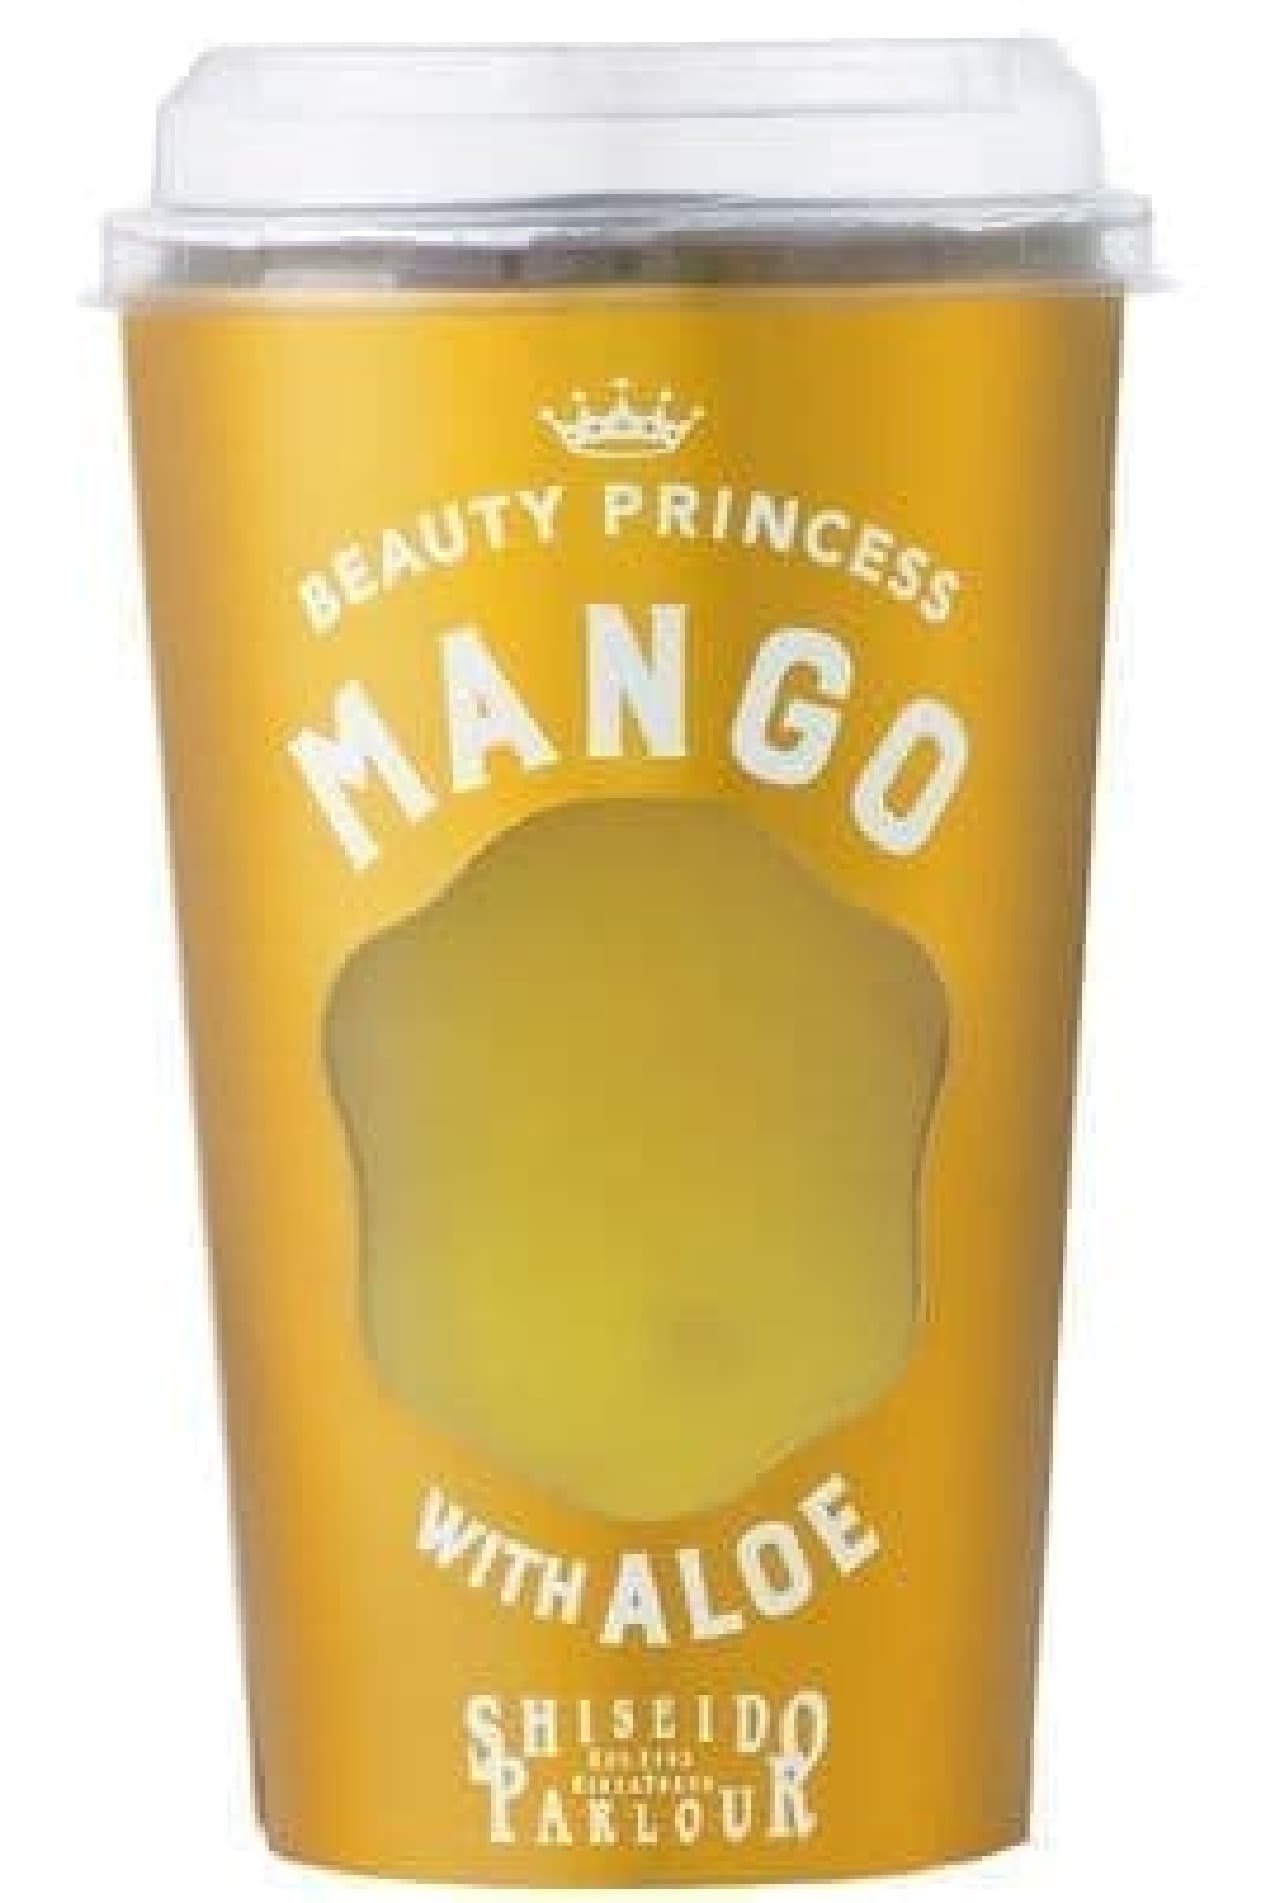 Shiseido Parlor "Beauty Princess Mango with Aloe"